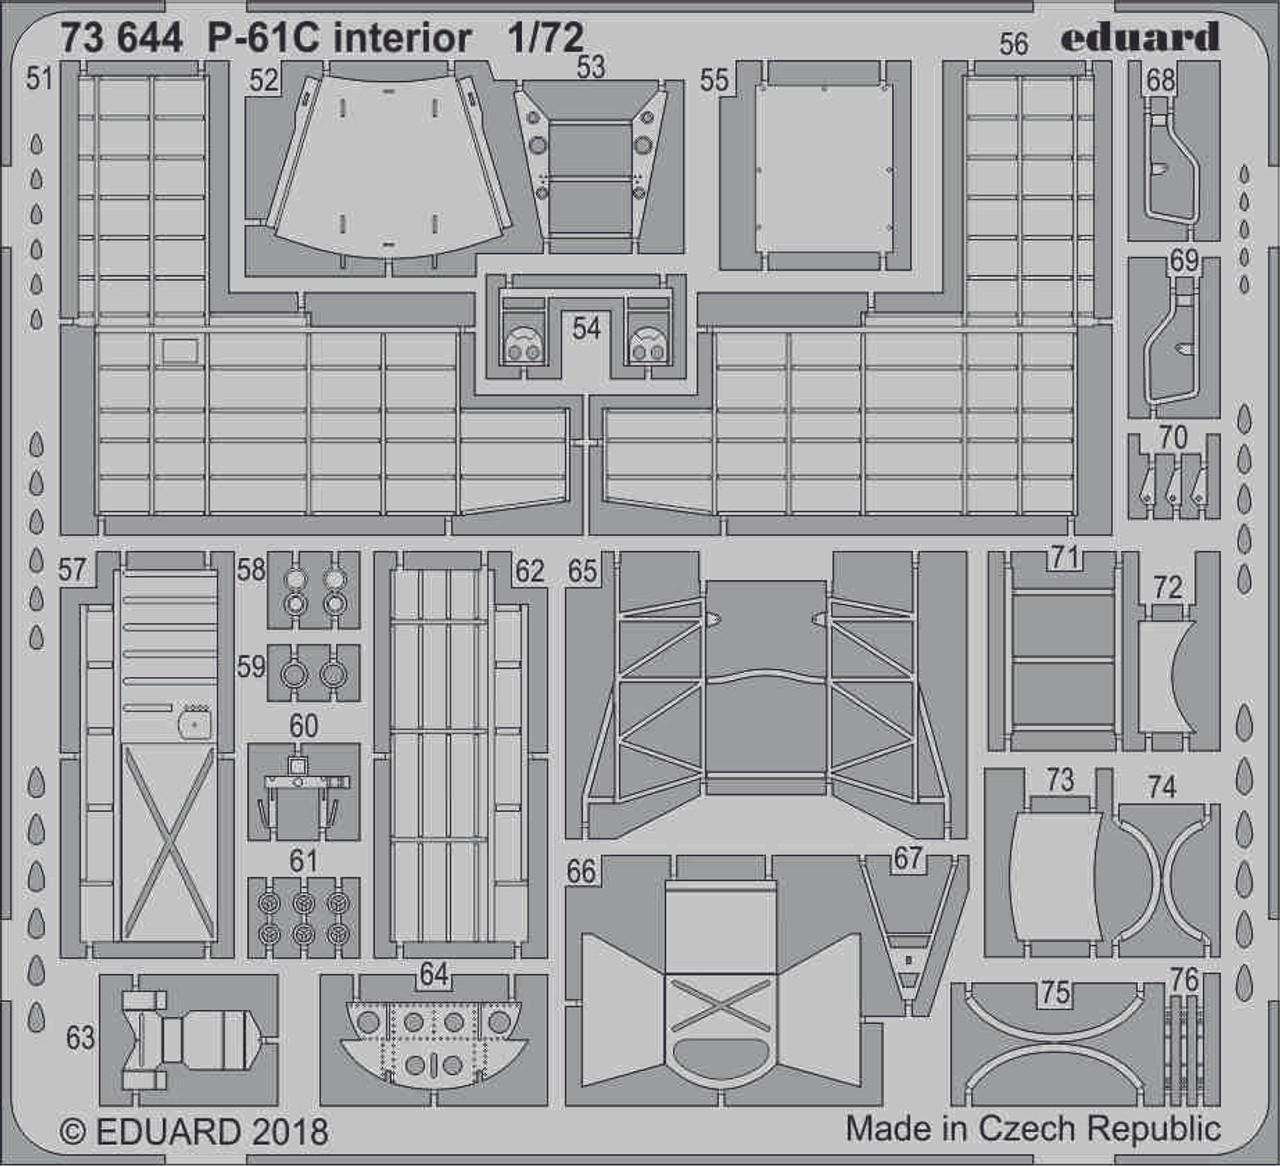 EDU73644 1/72 Eduard P-61C Interior for Hobby Boss Pre-Painted MMD Squadron